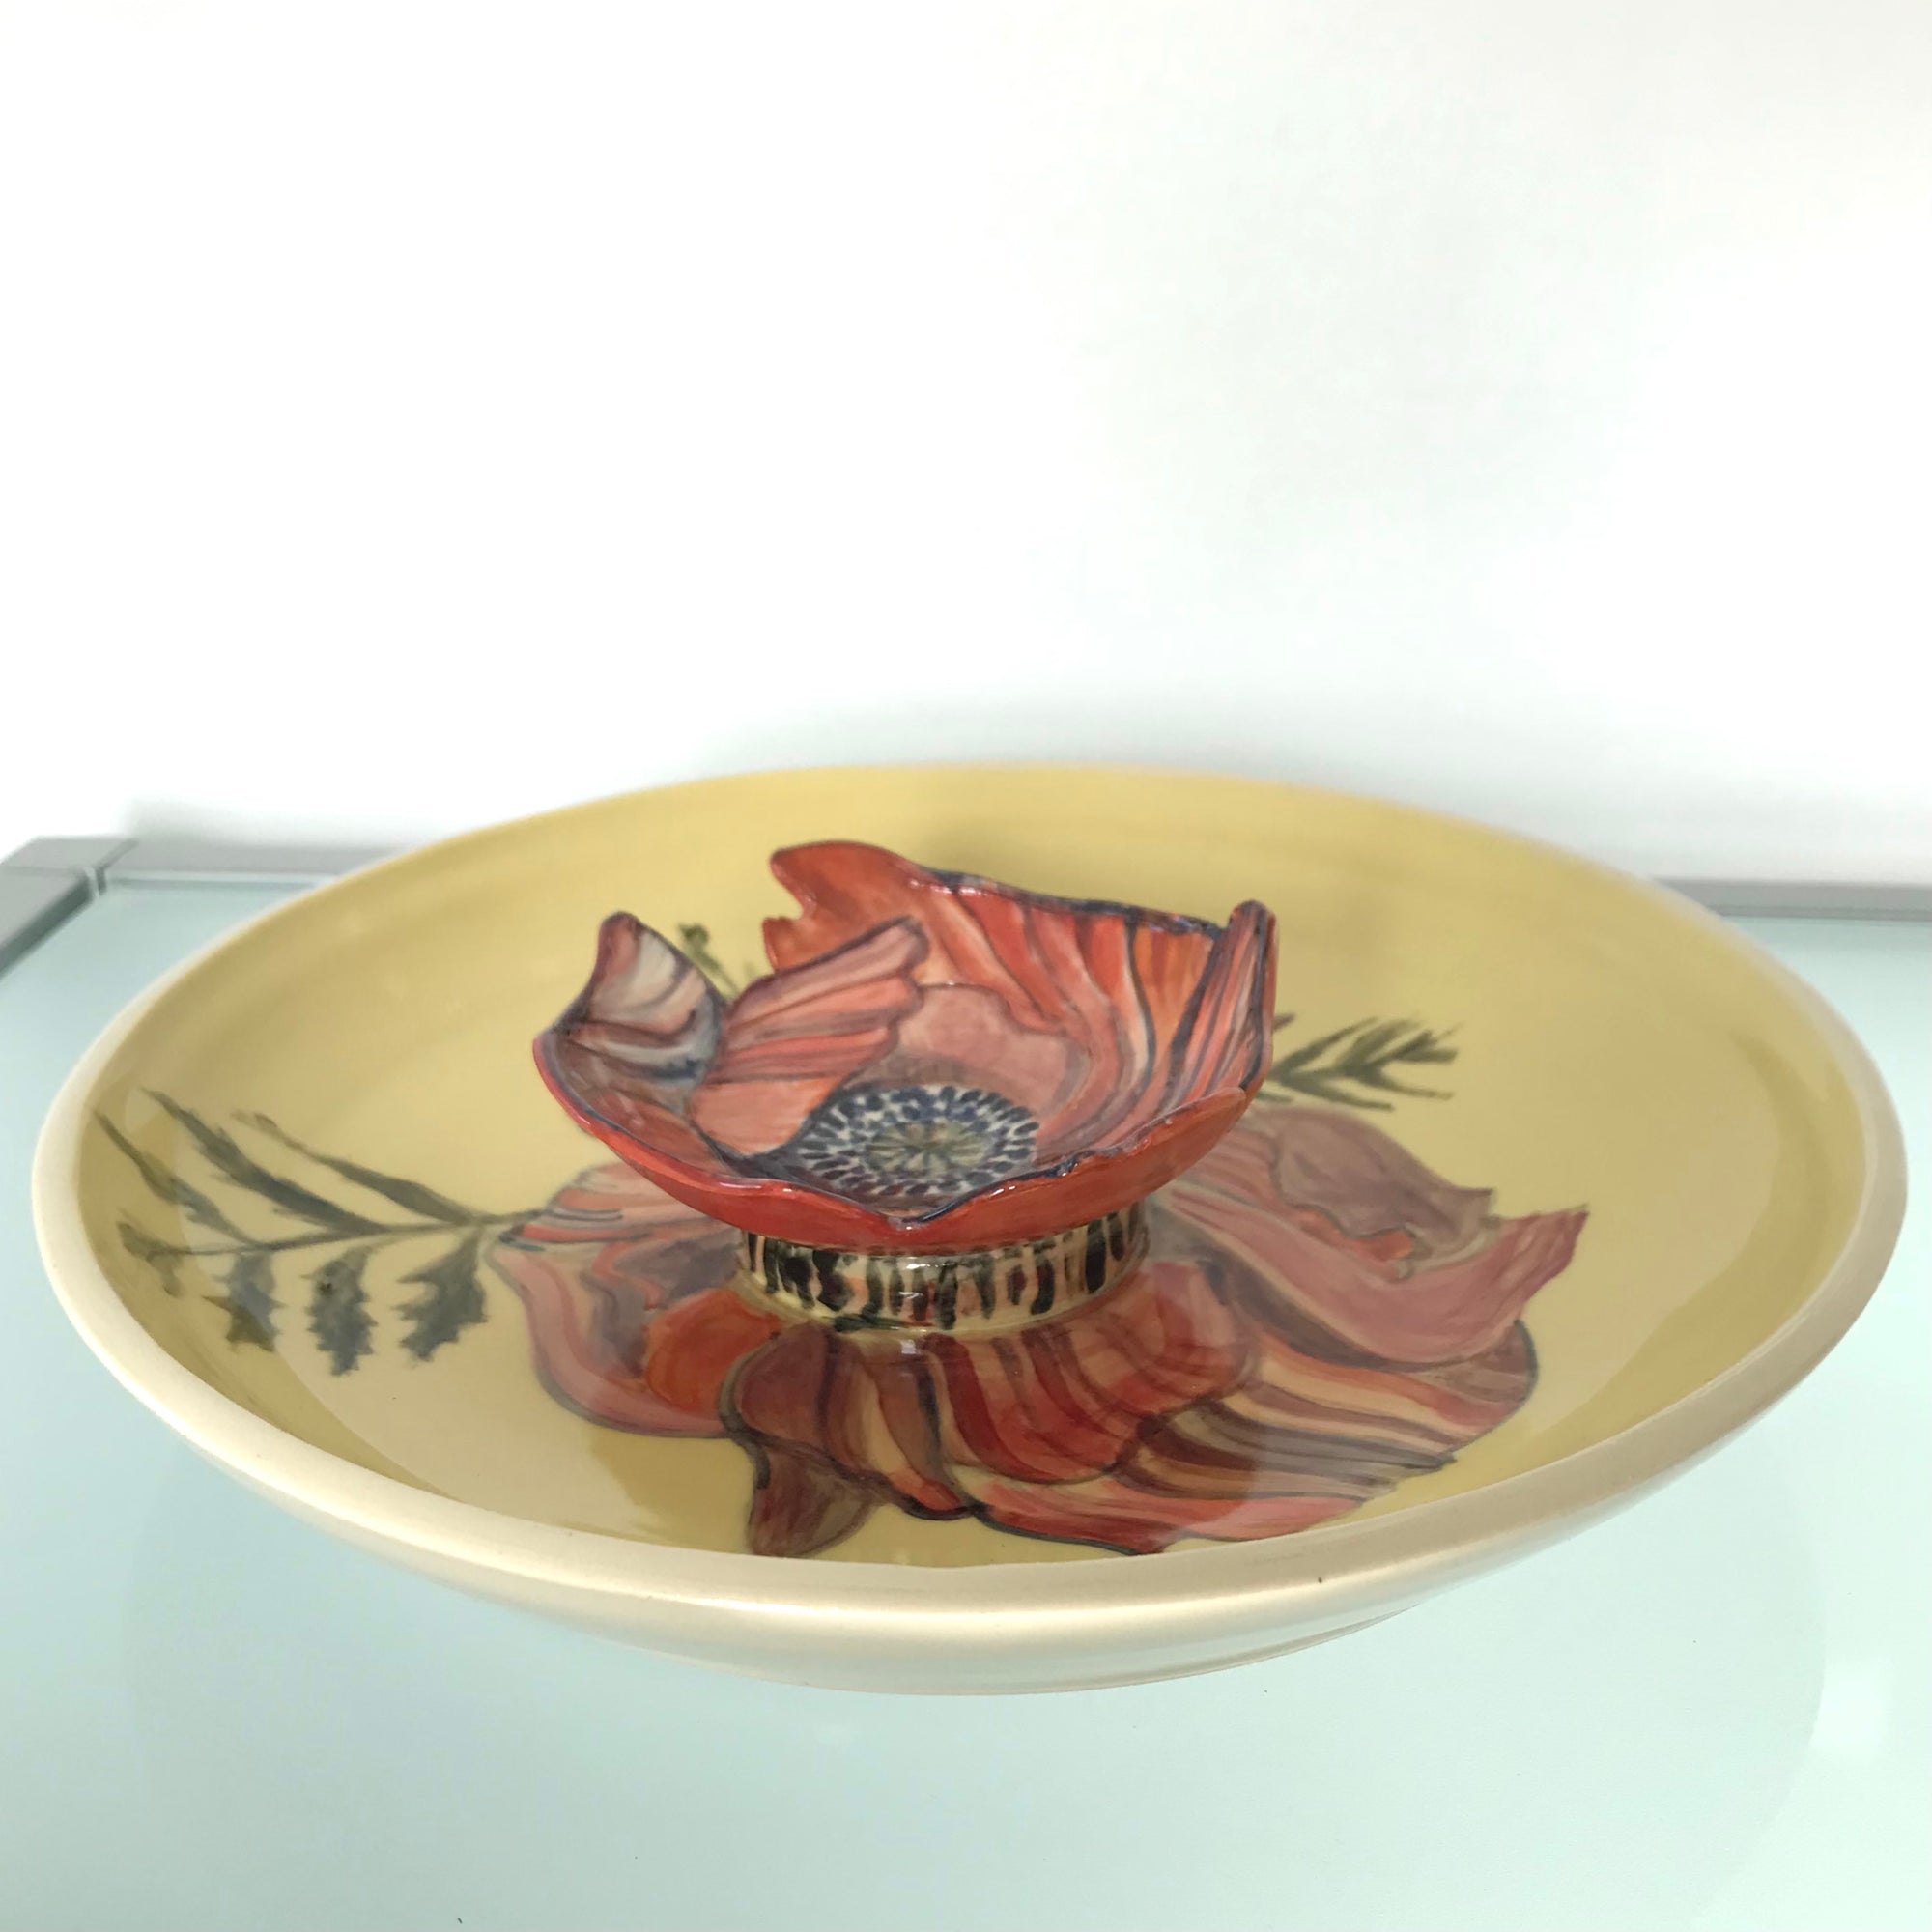 Linda Walton - Pottery - Poppy Platter with Bowl